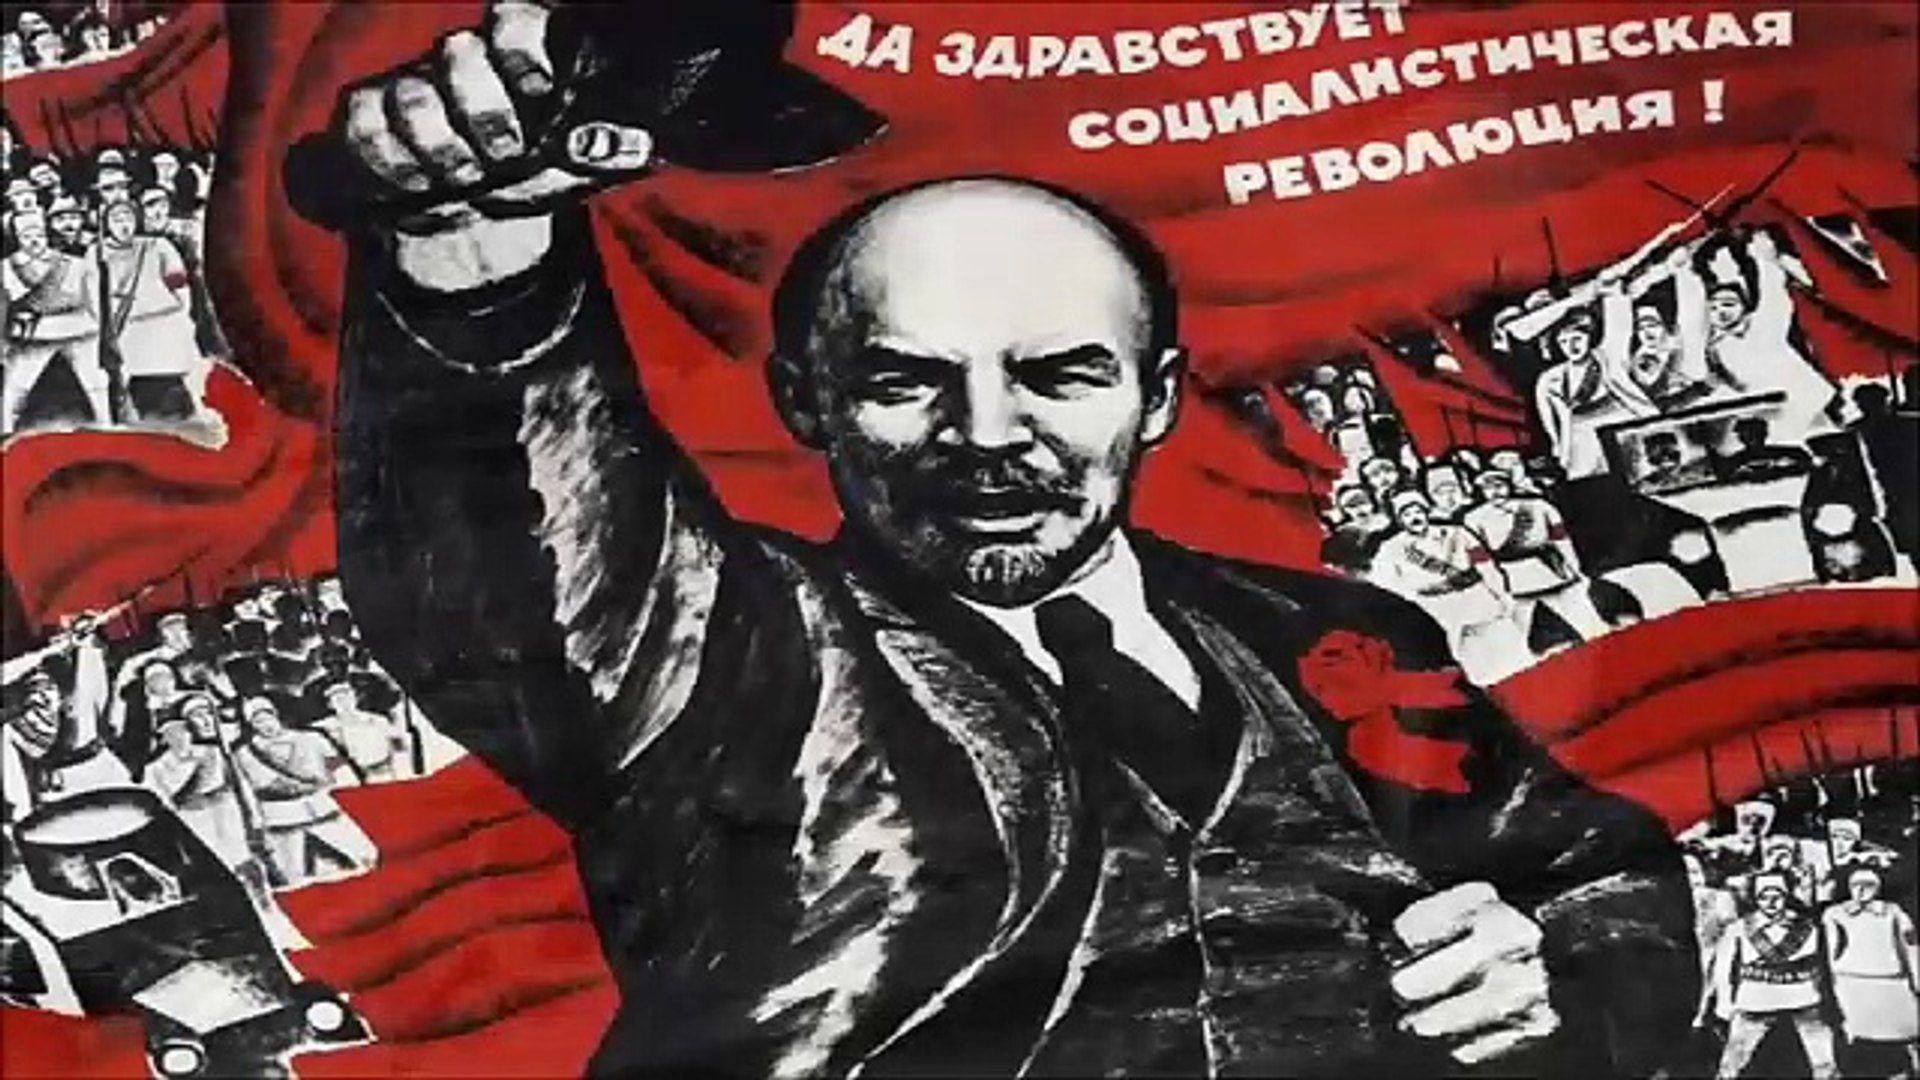 10 Most Popular Socialist Leaders Around the World